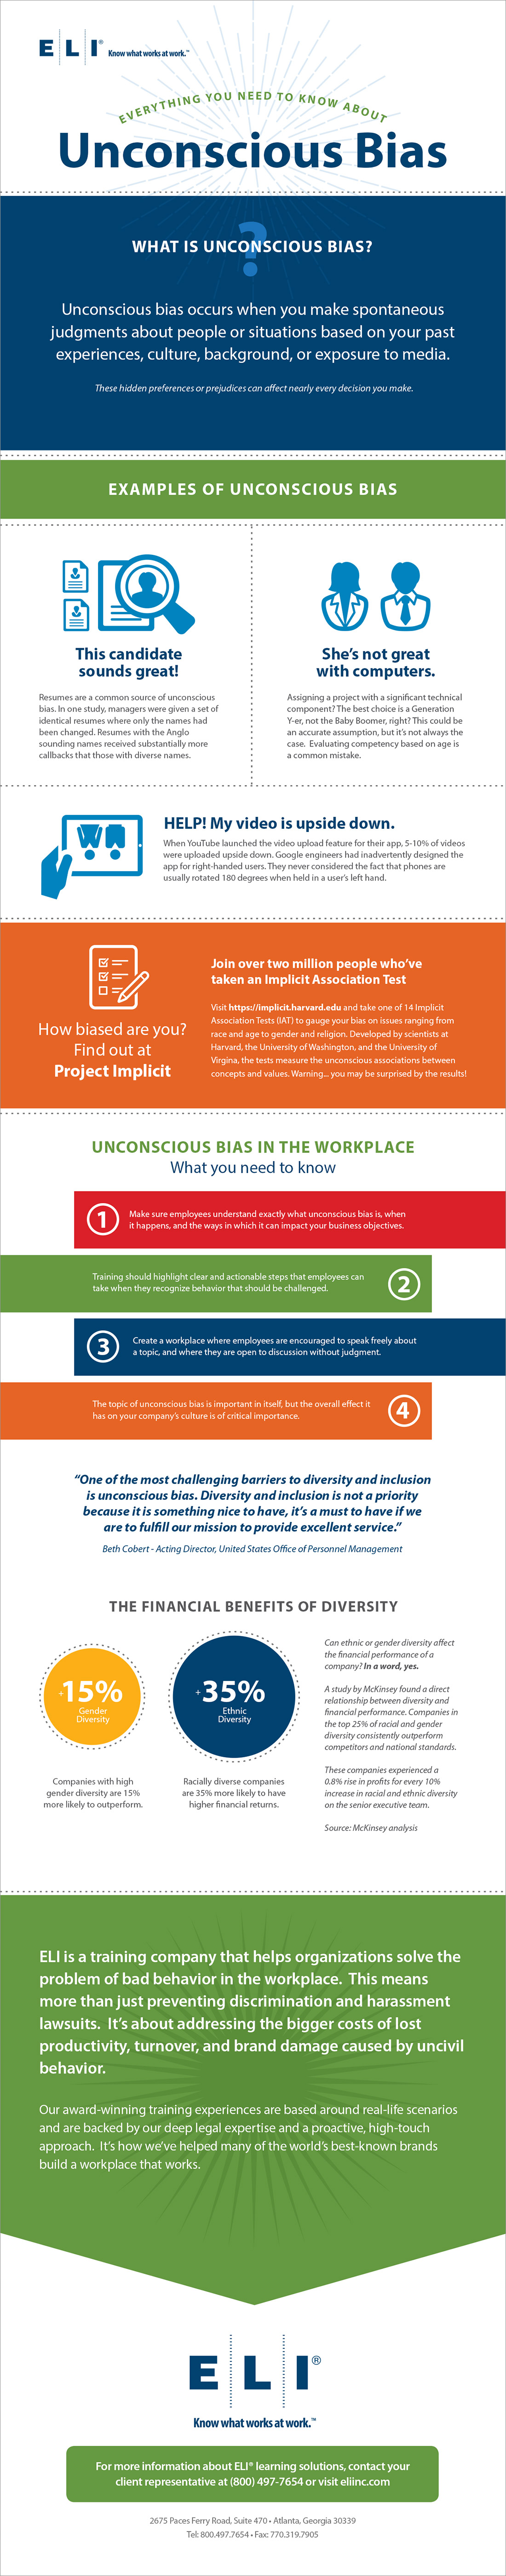 unconscious-bias-infographic-eli